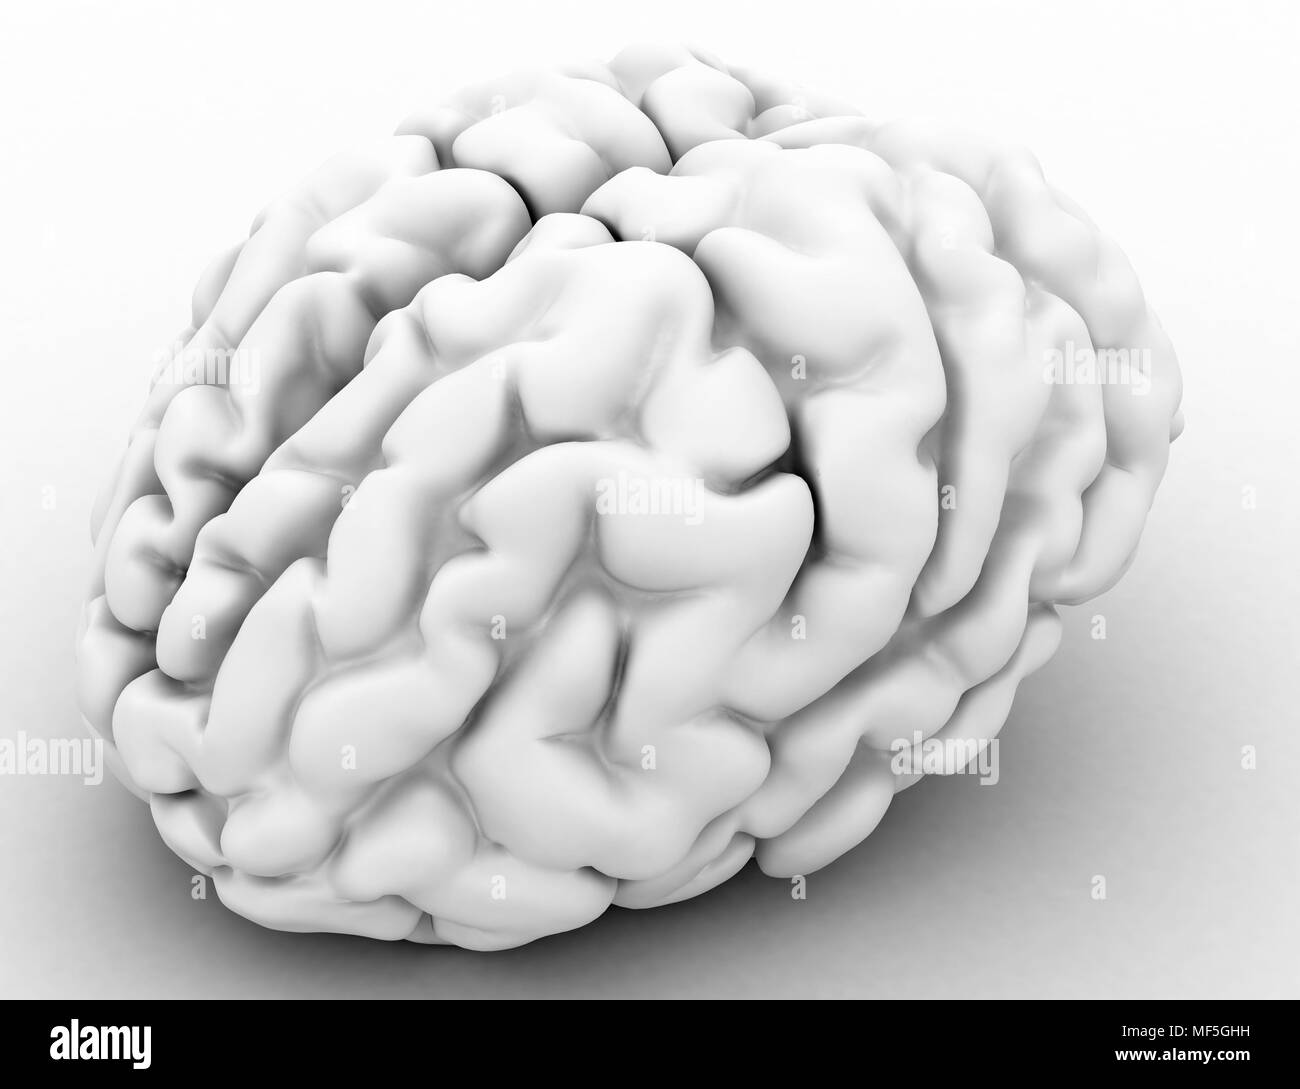 White 3d human brain model Stock Photo